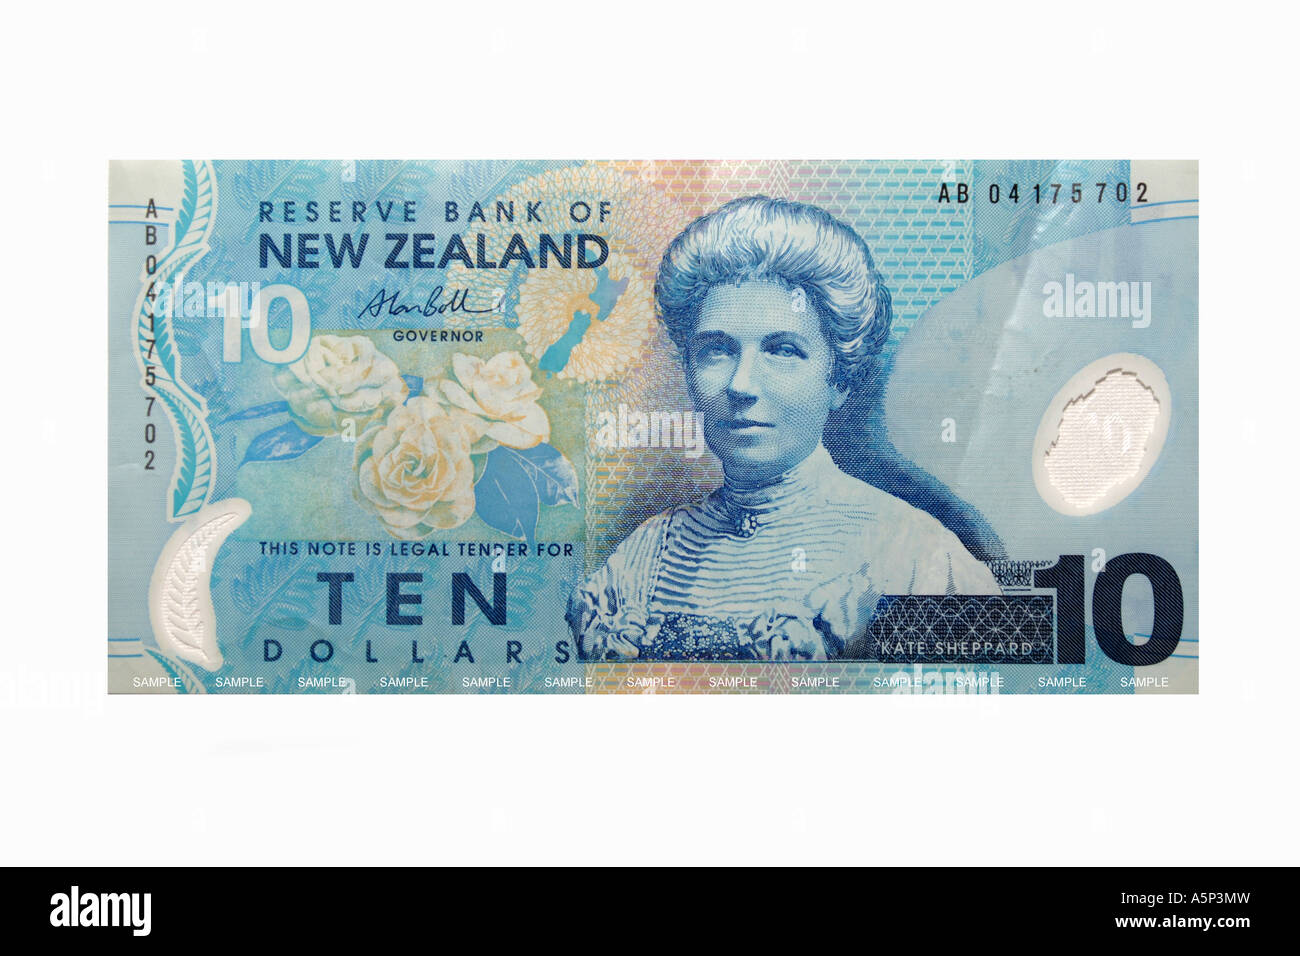 A New Zealand 10 Dollar Note. Stock Photo